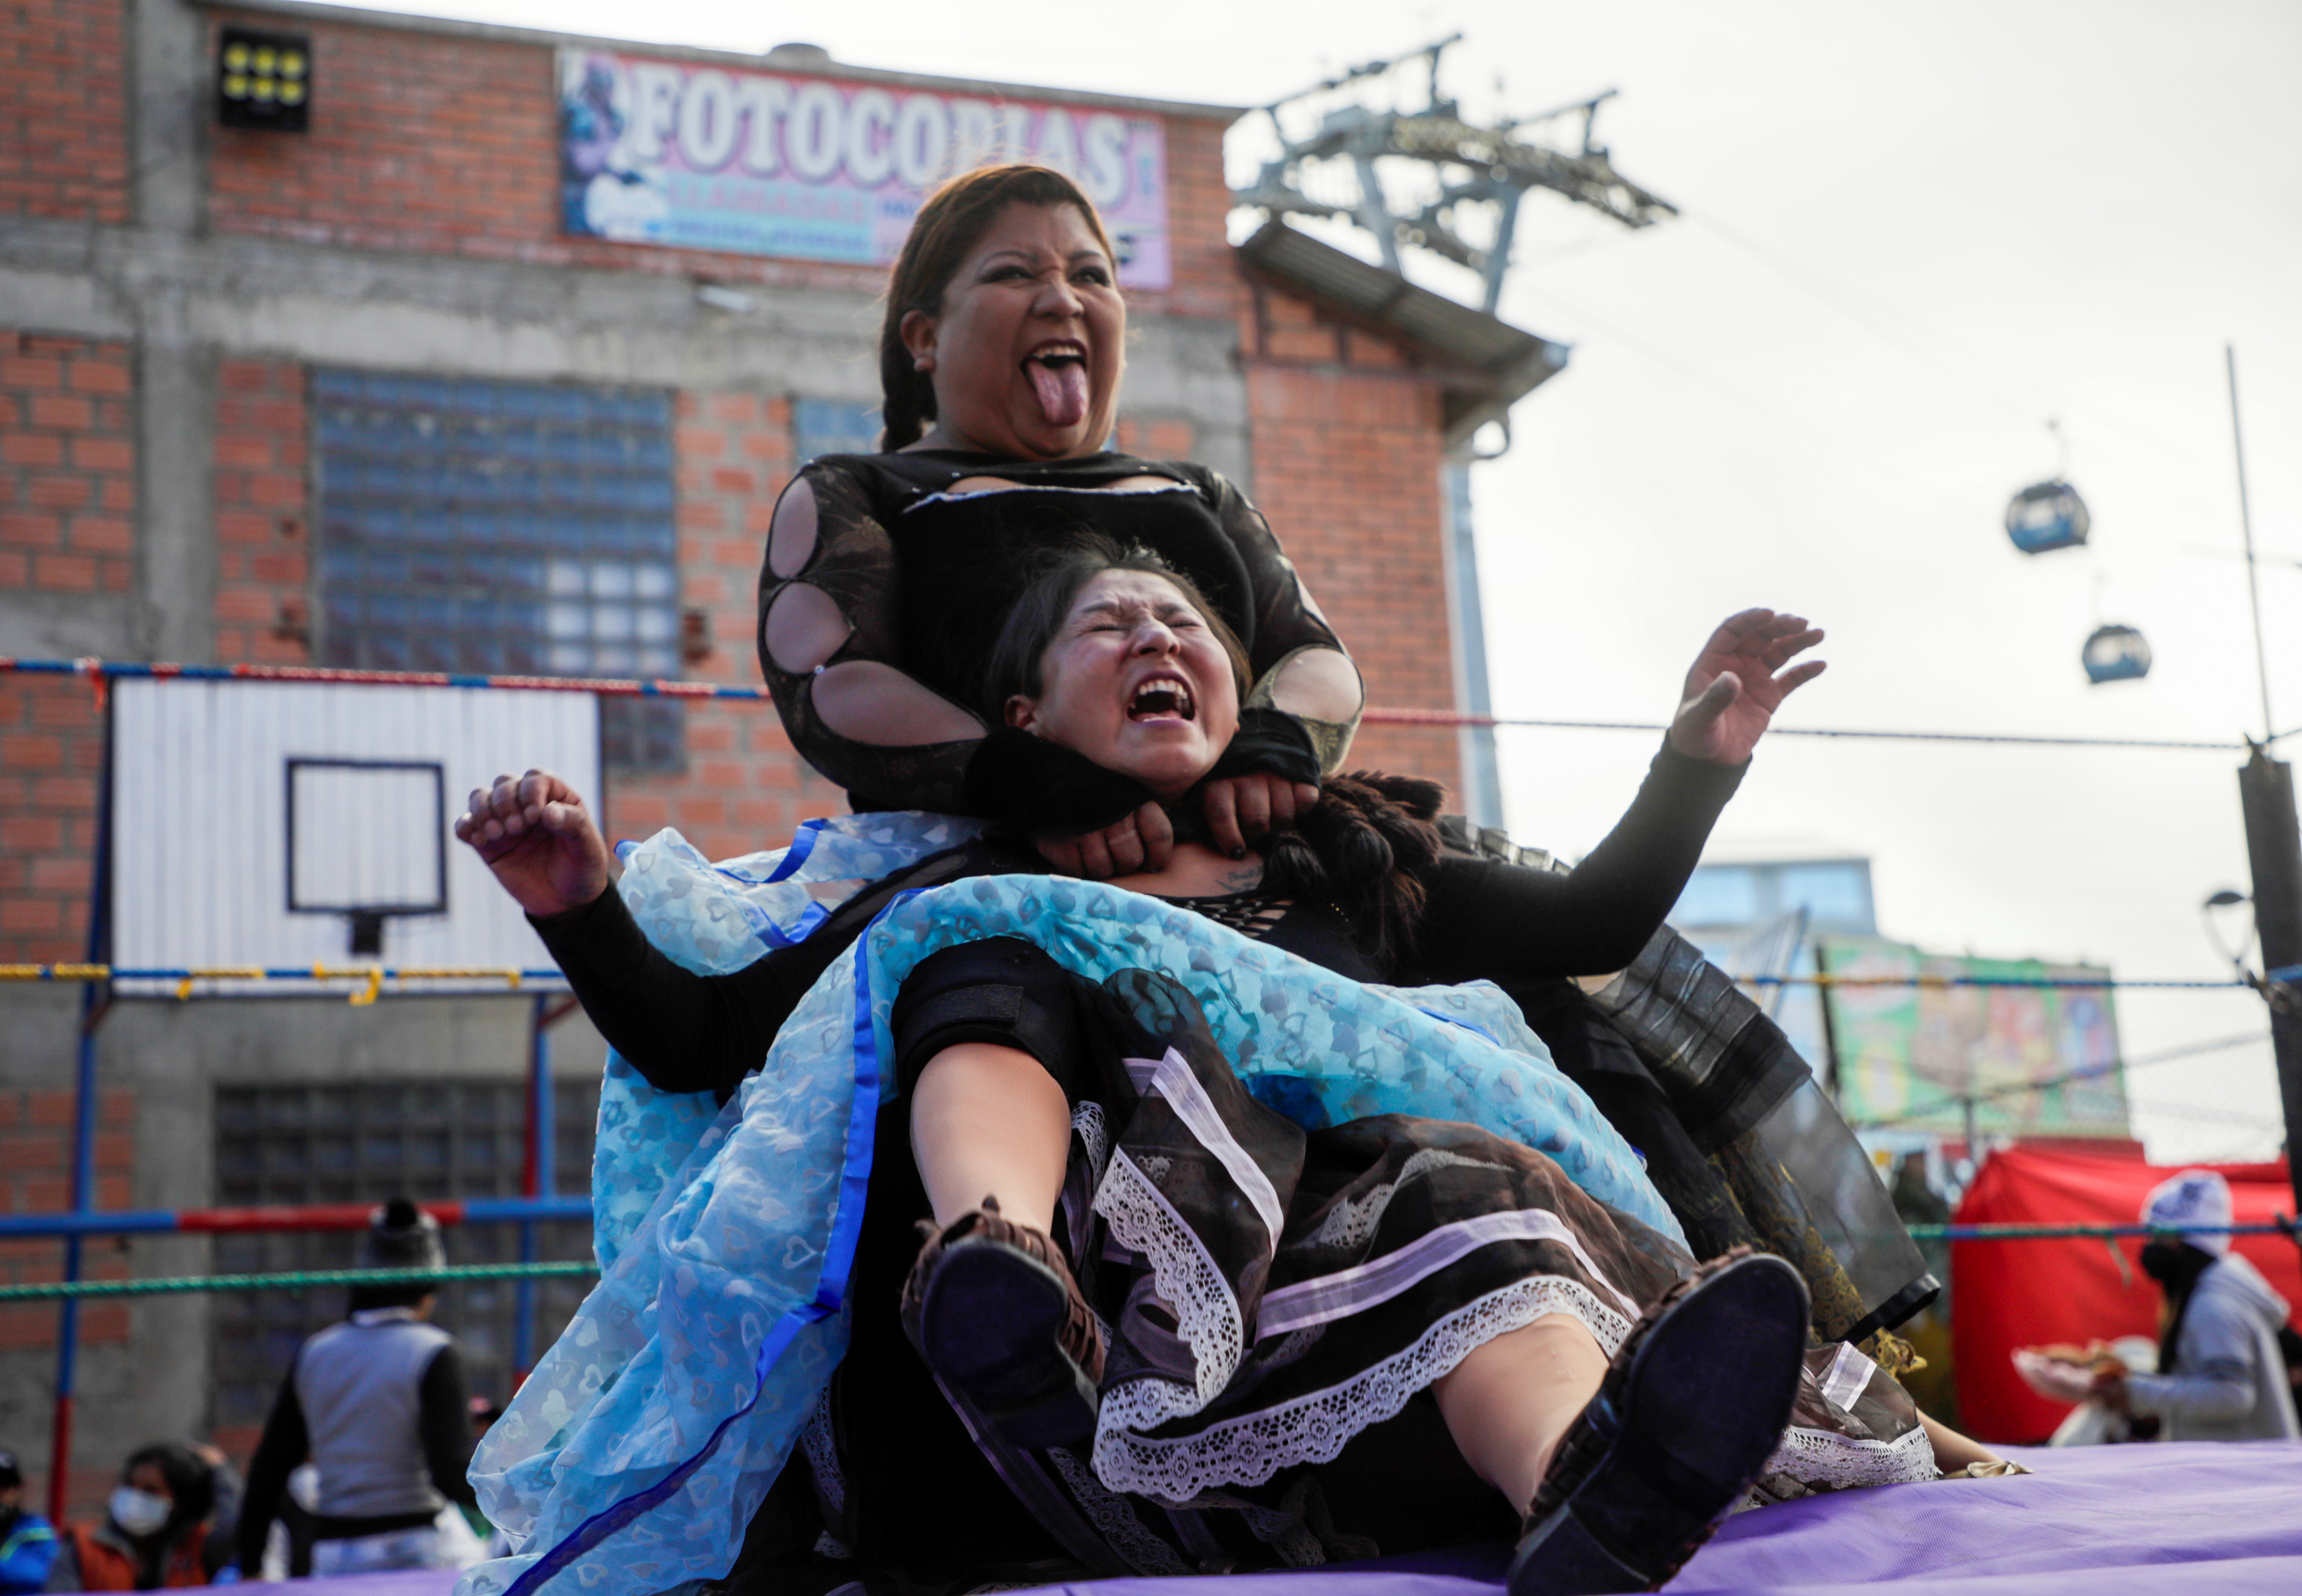 Cholitas luchadoras de Bolivia regresan al ring derrotando a la pandemia (FOTOS)